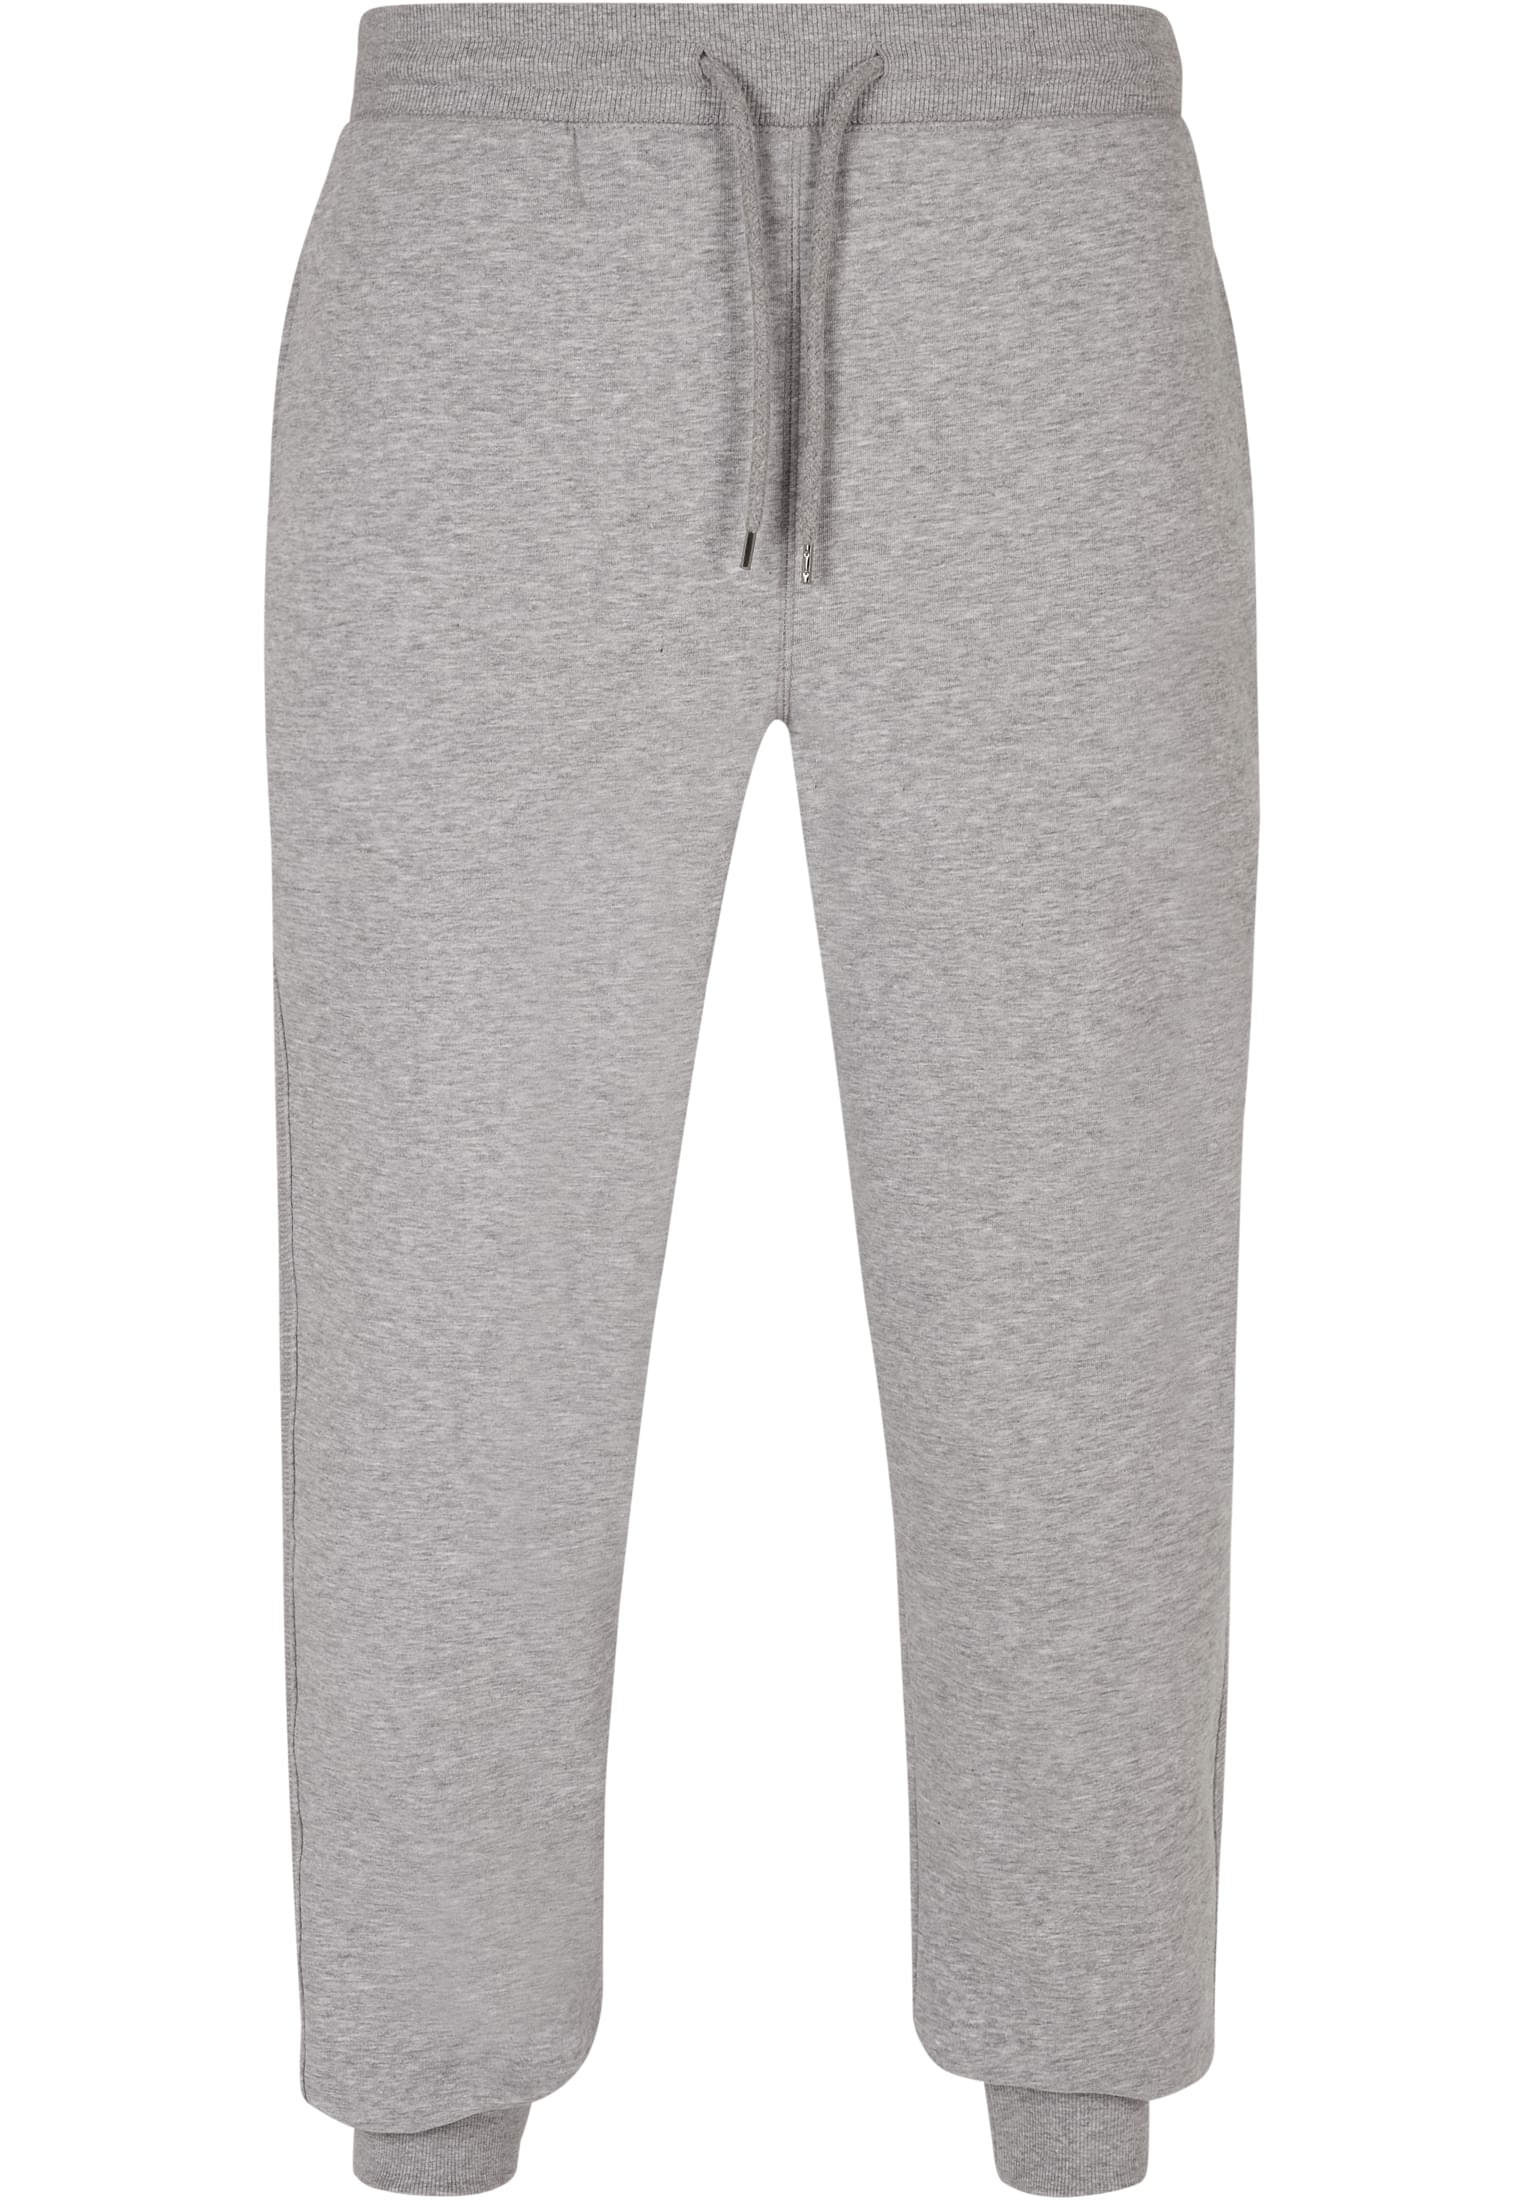 Herren Basic Sweatpants in Farbe grey